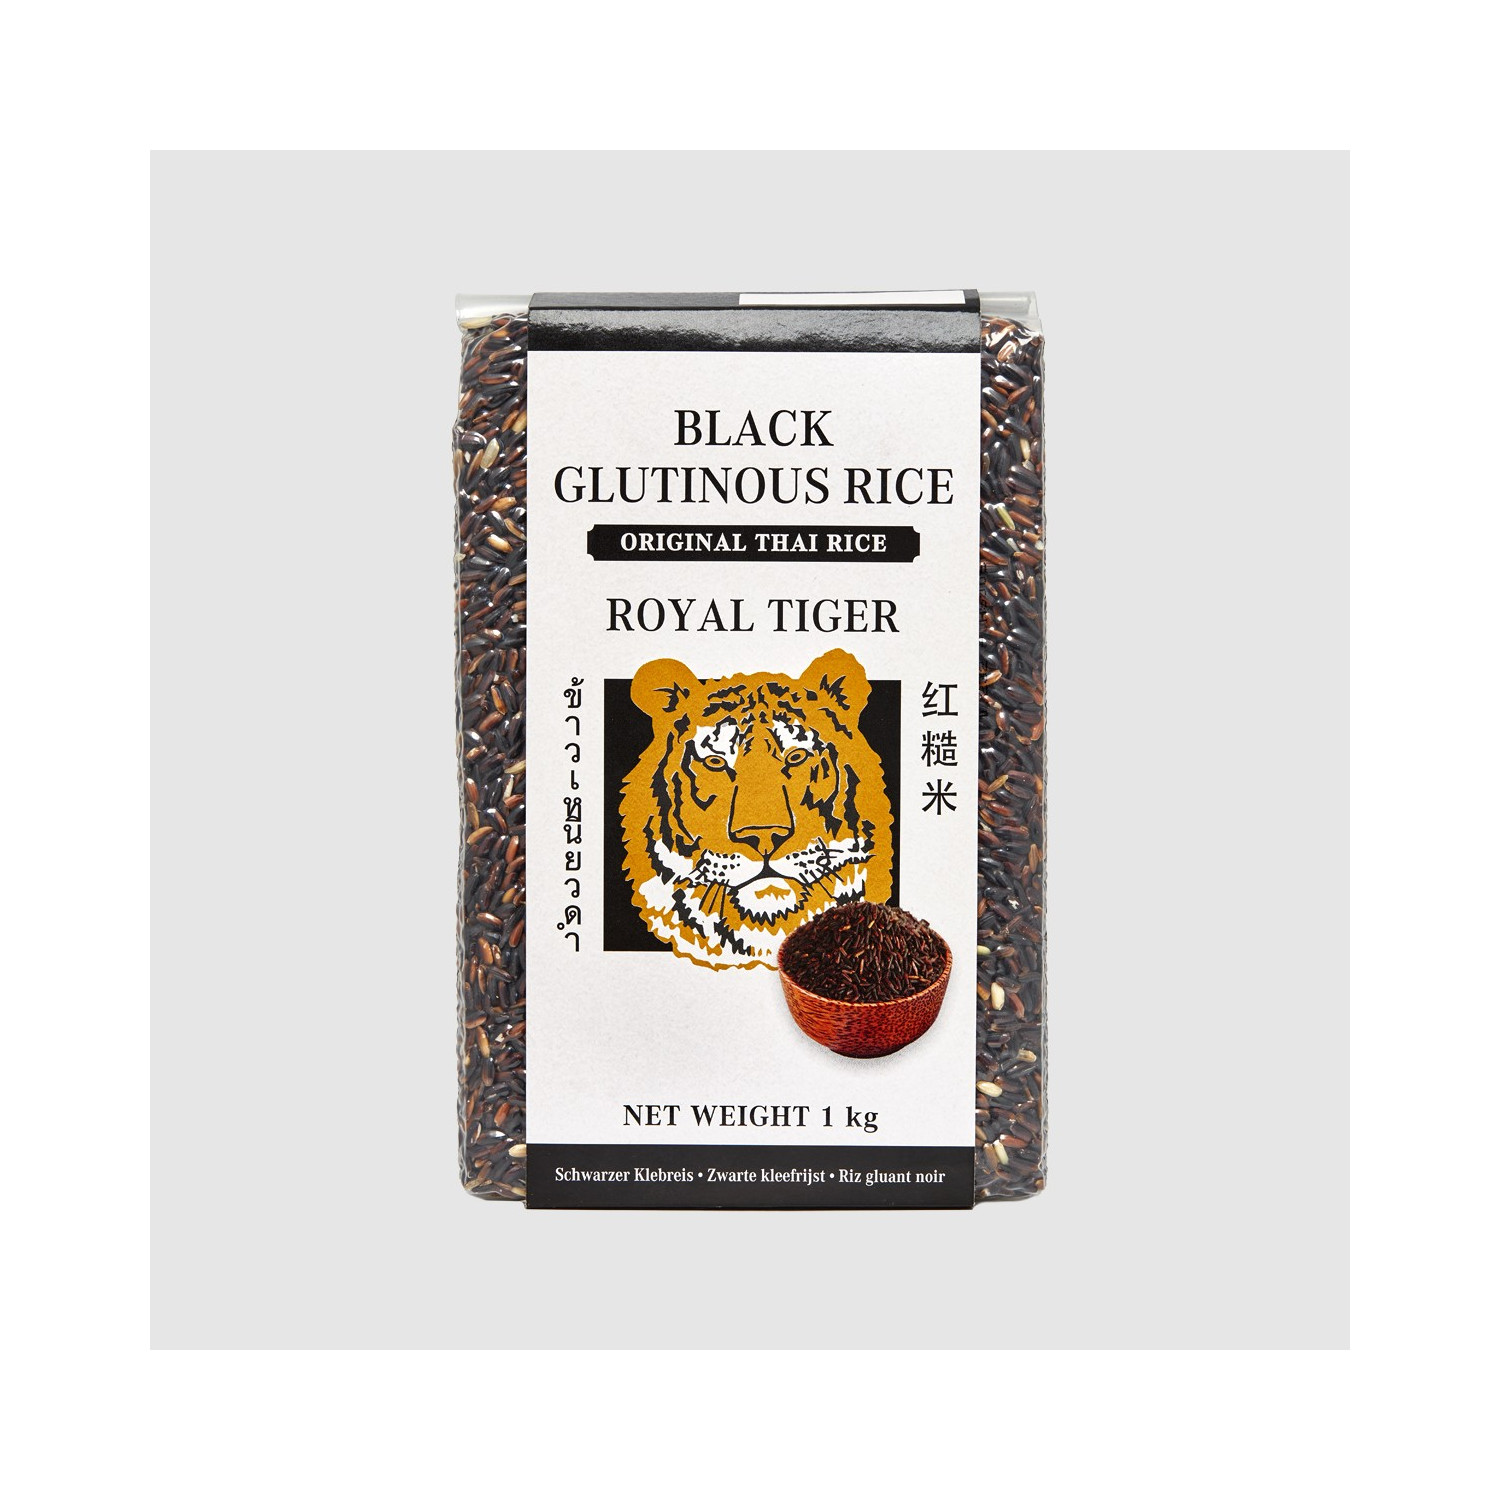 Arroz glutinoso negro Royal Tiger